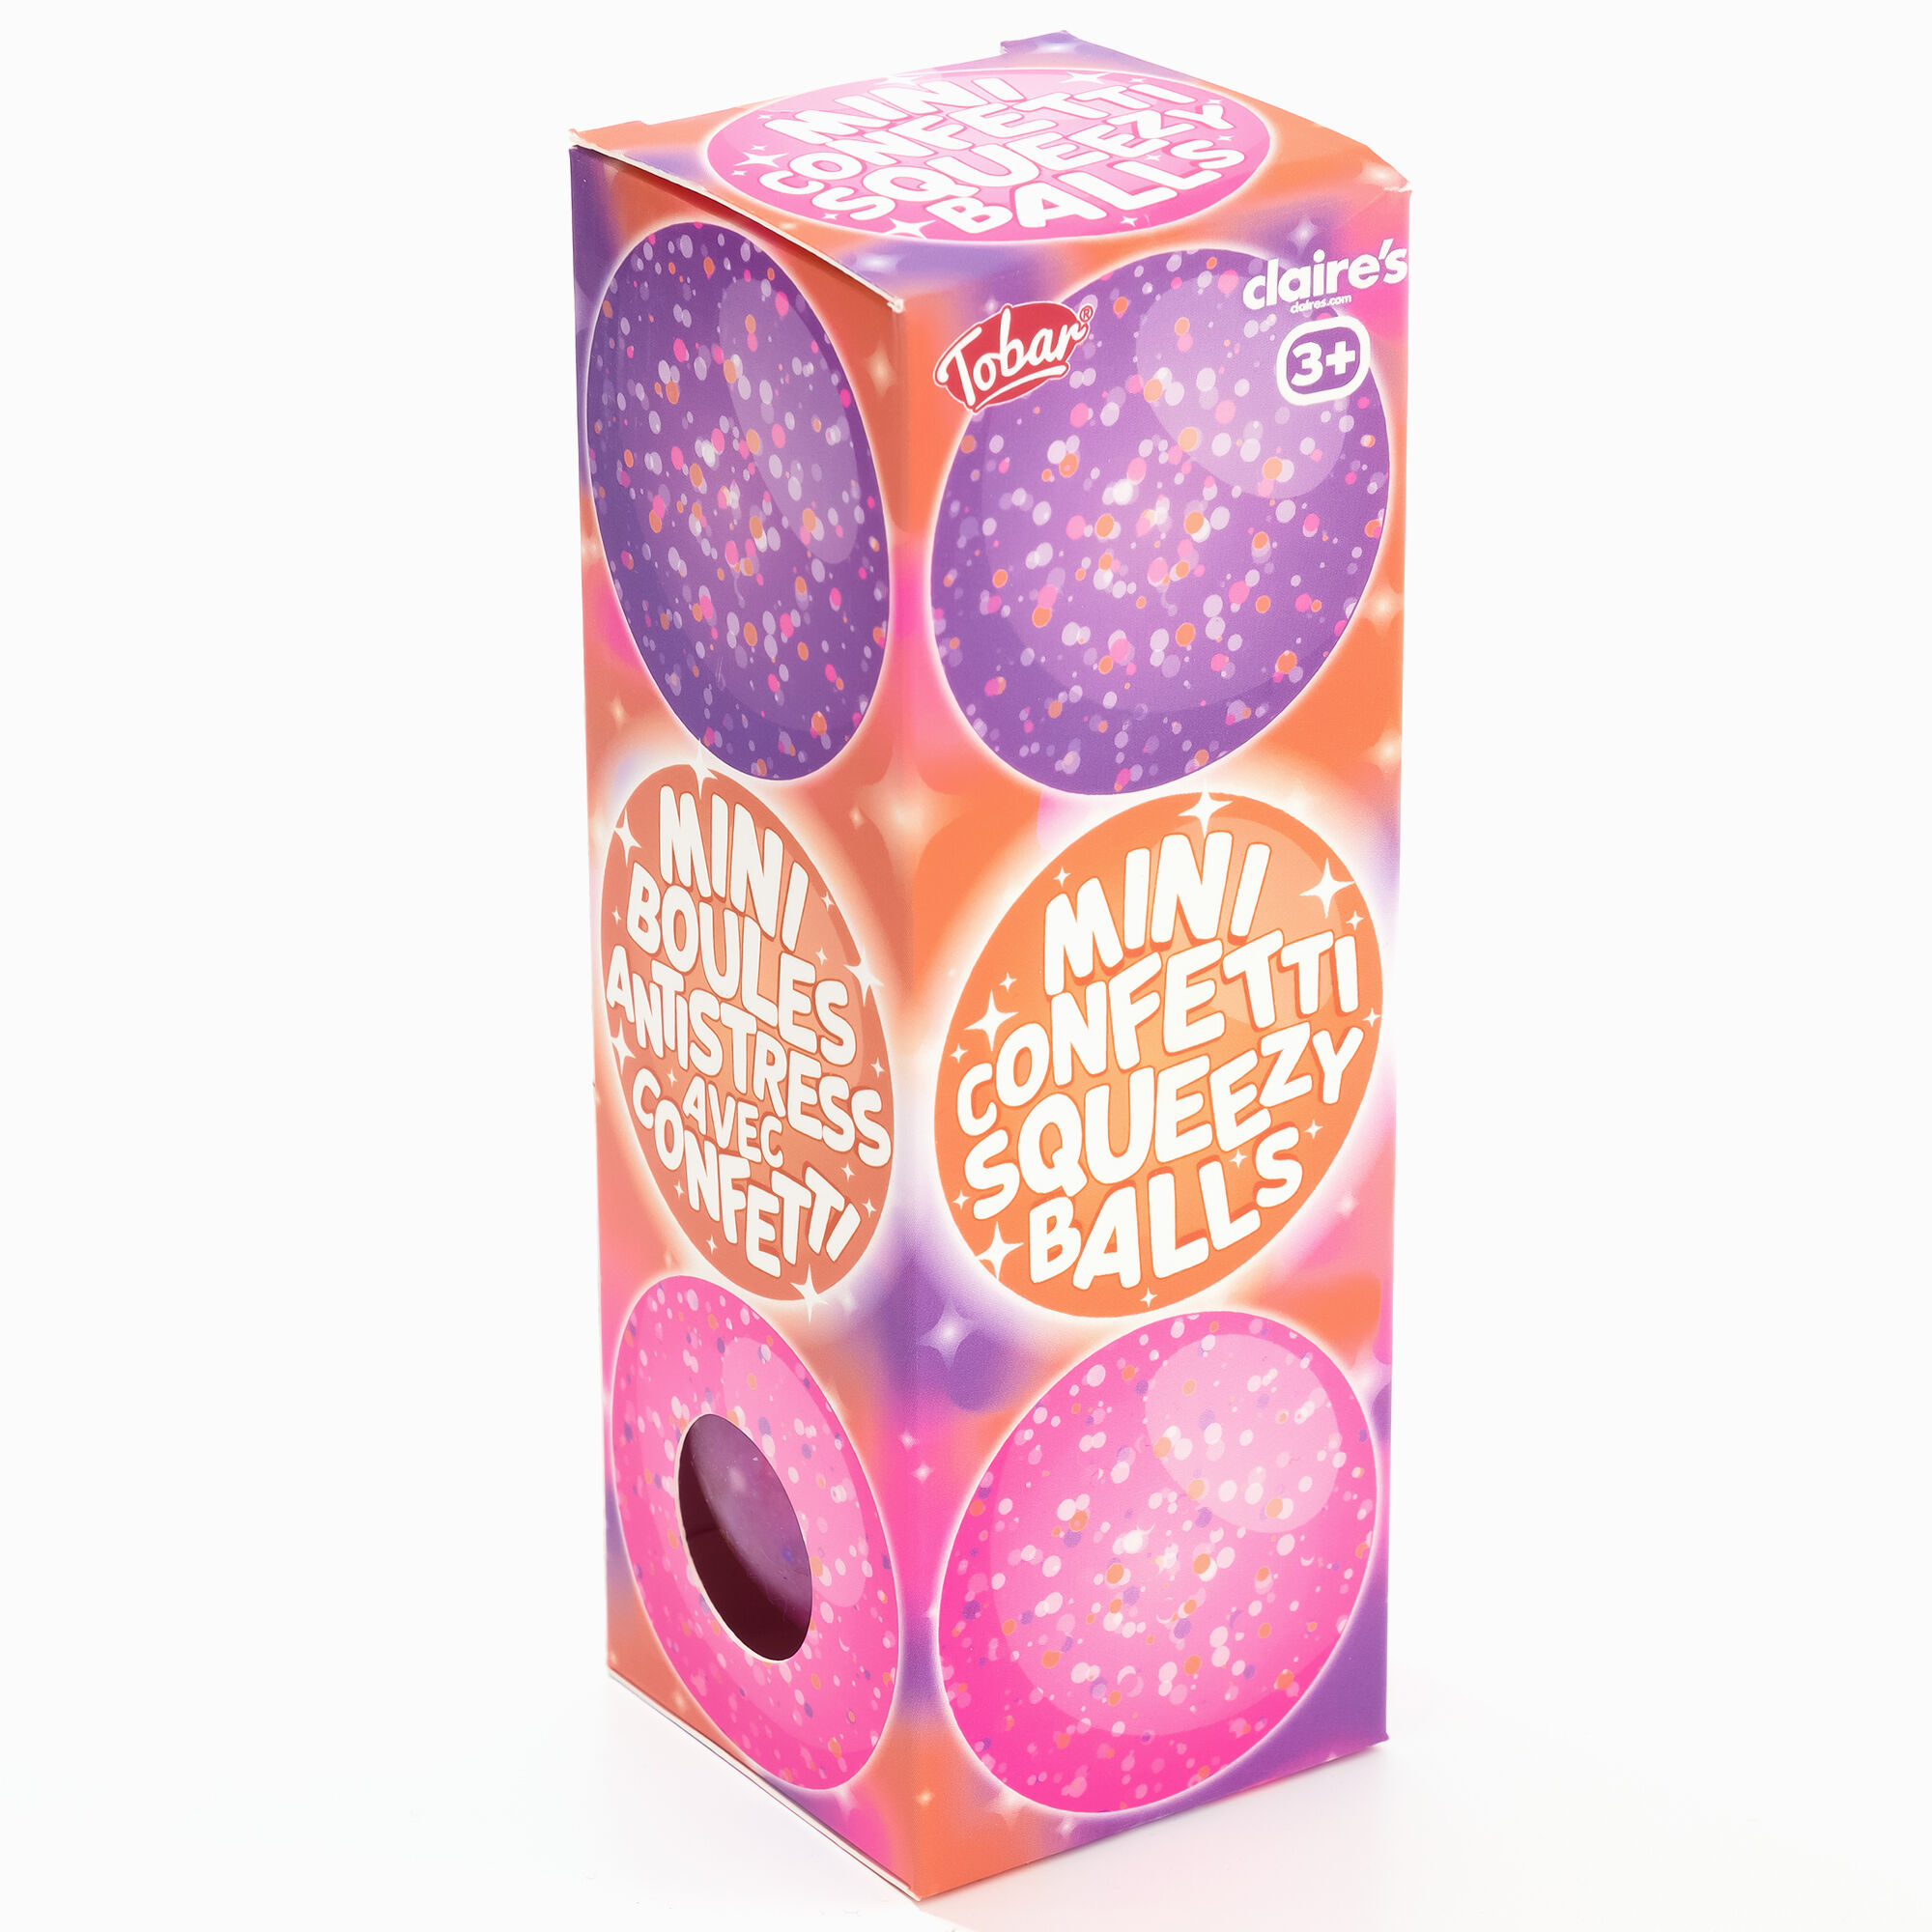 View Claires Mini Confetti Squeezy Balls Fidget Toy 3 Pack information